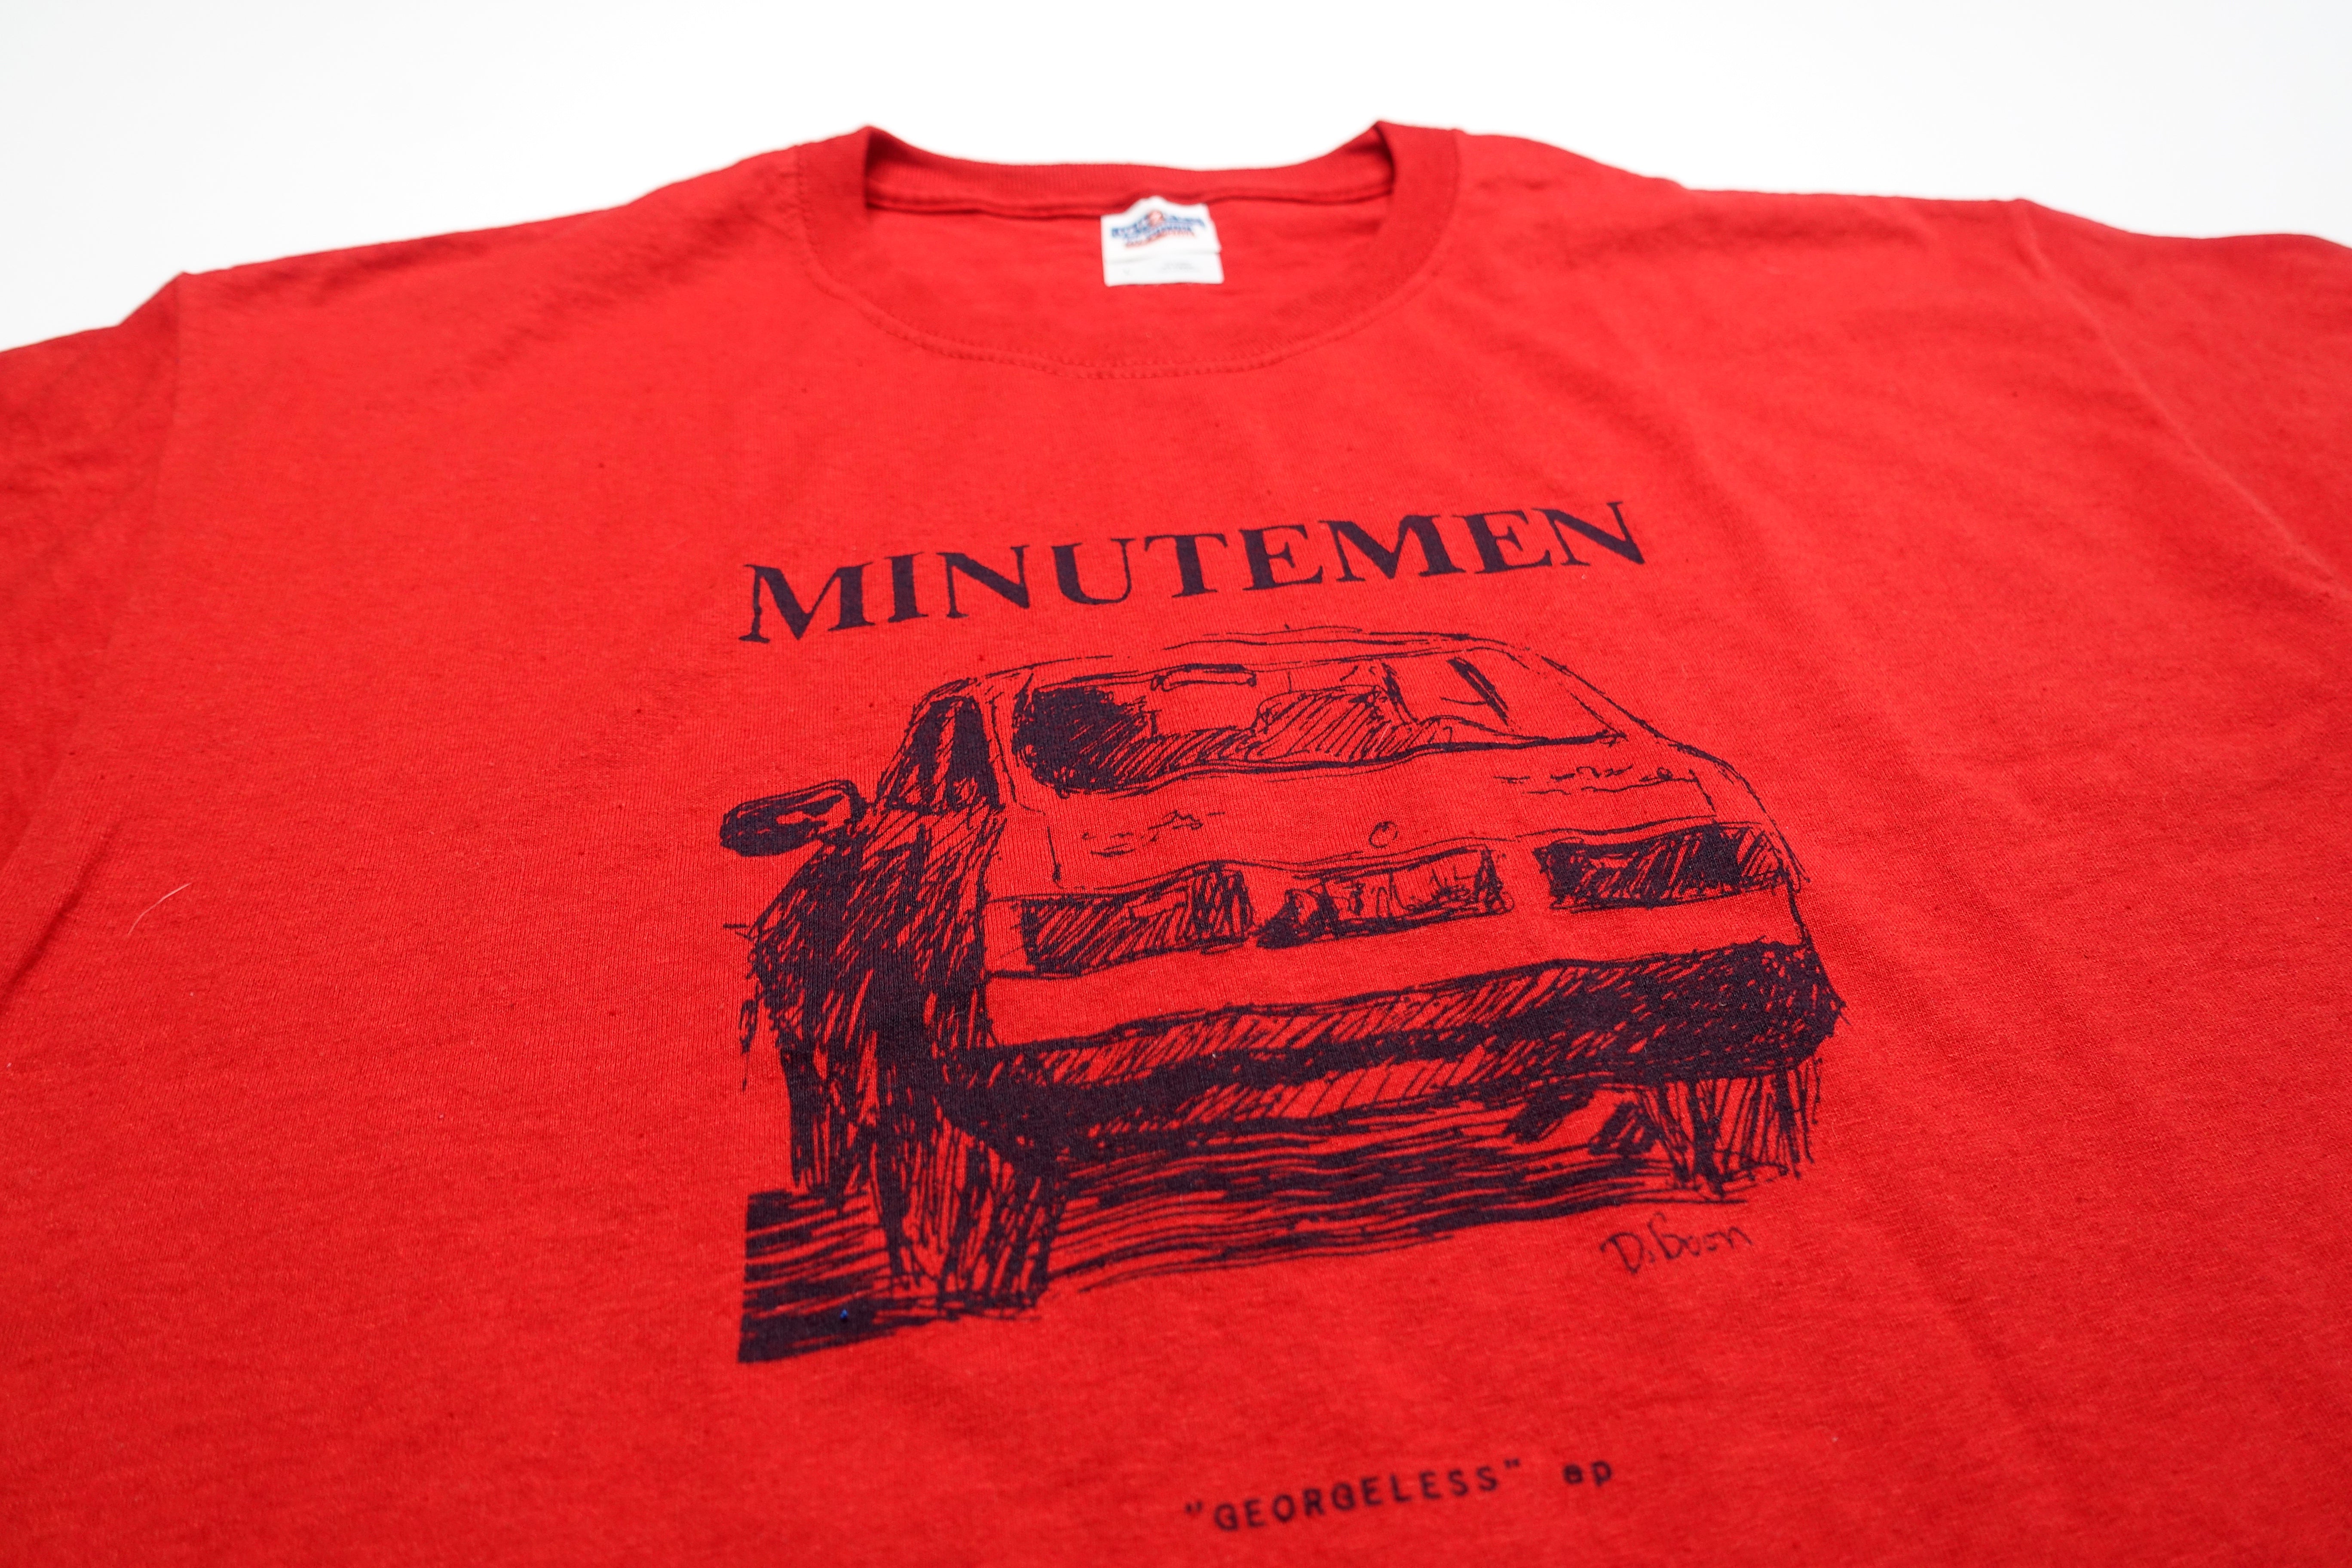 Minutemen - Georgeless EP (Bootleg) Shirt Size Large